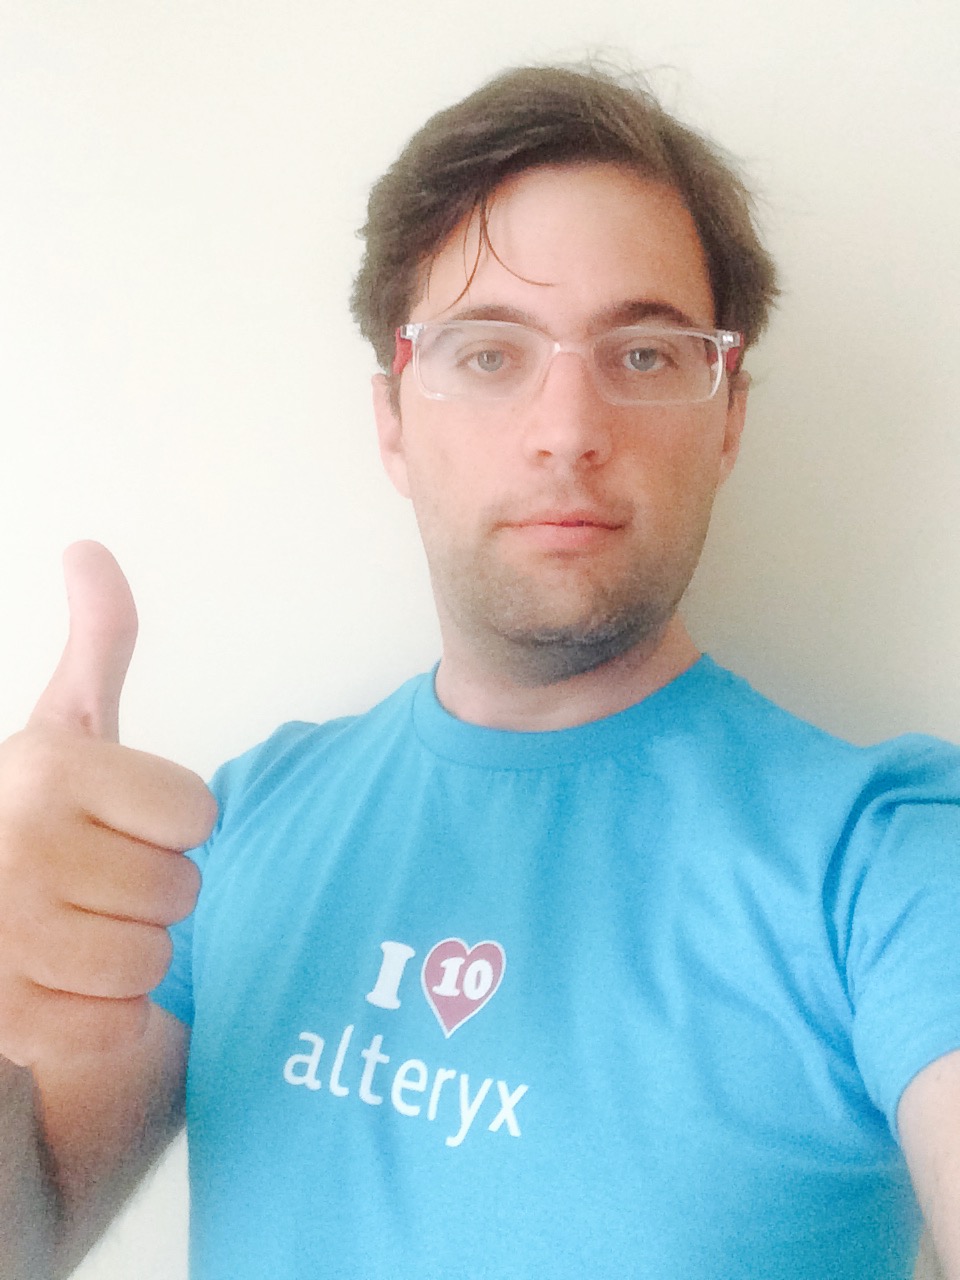 Alteryx T-shirt.jpg